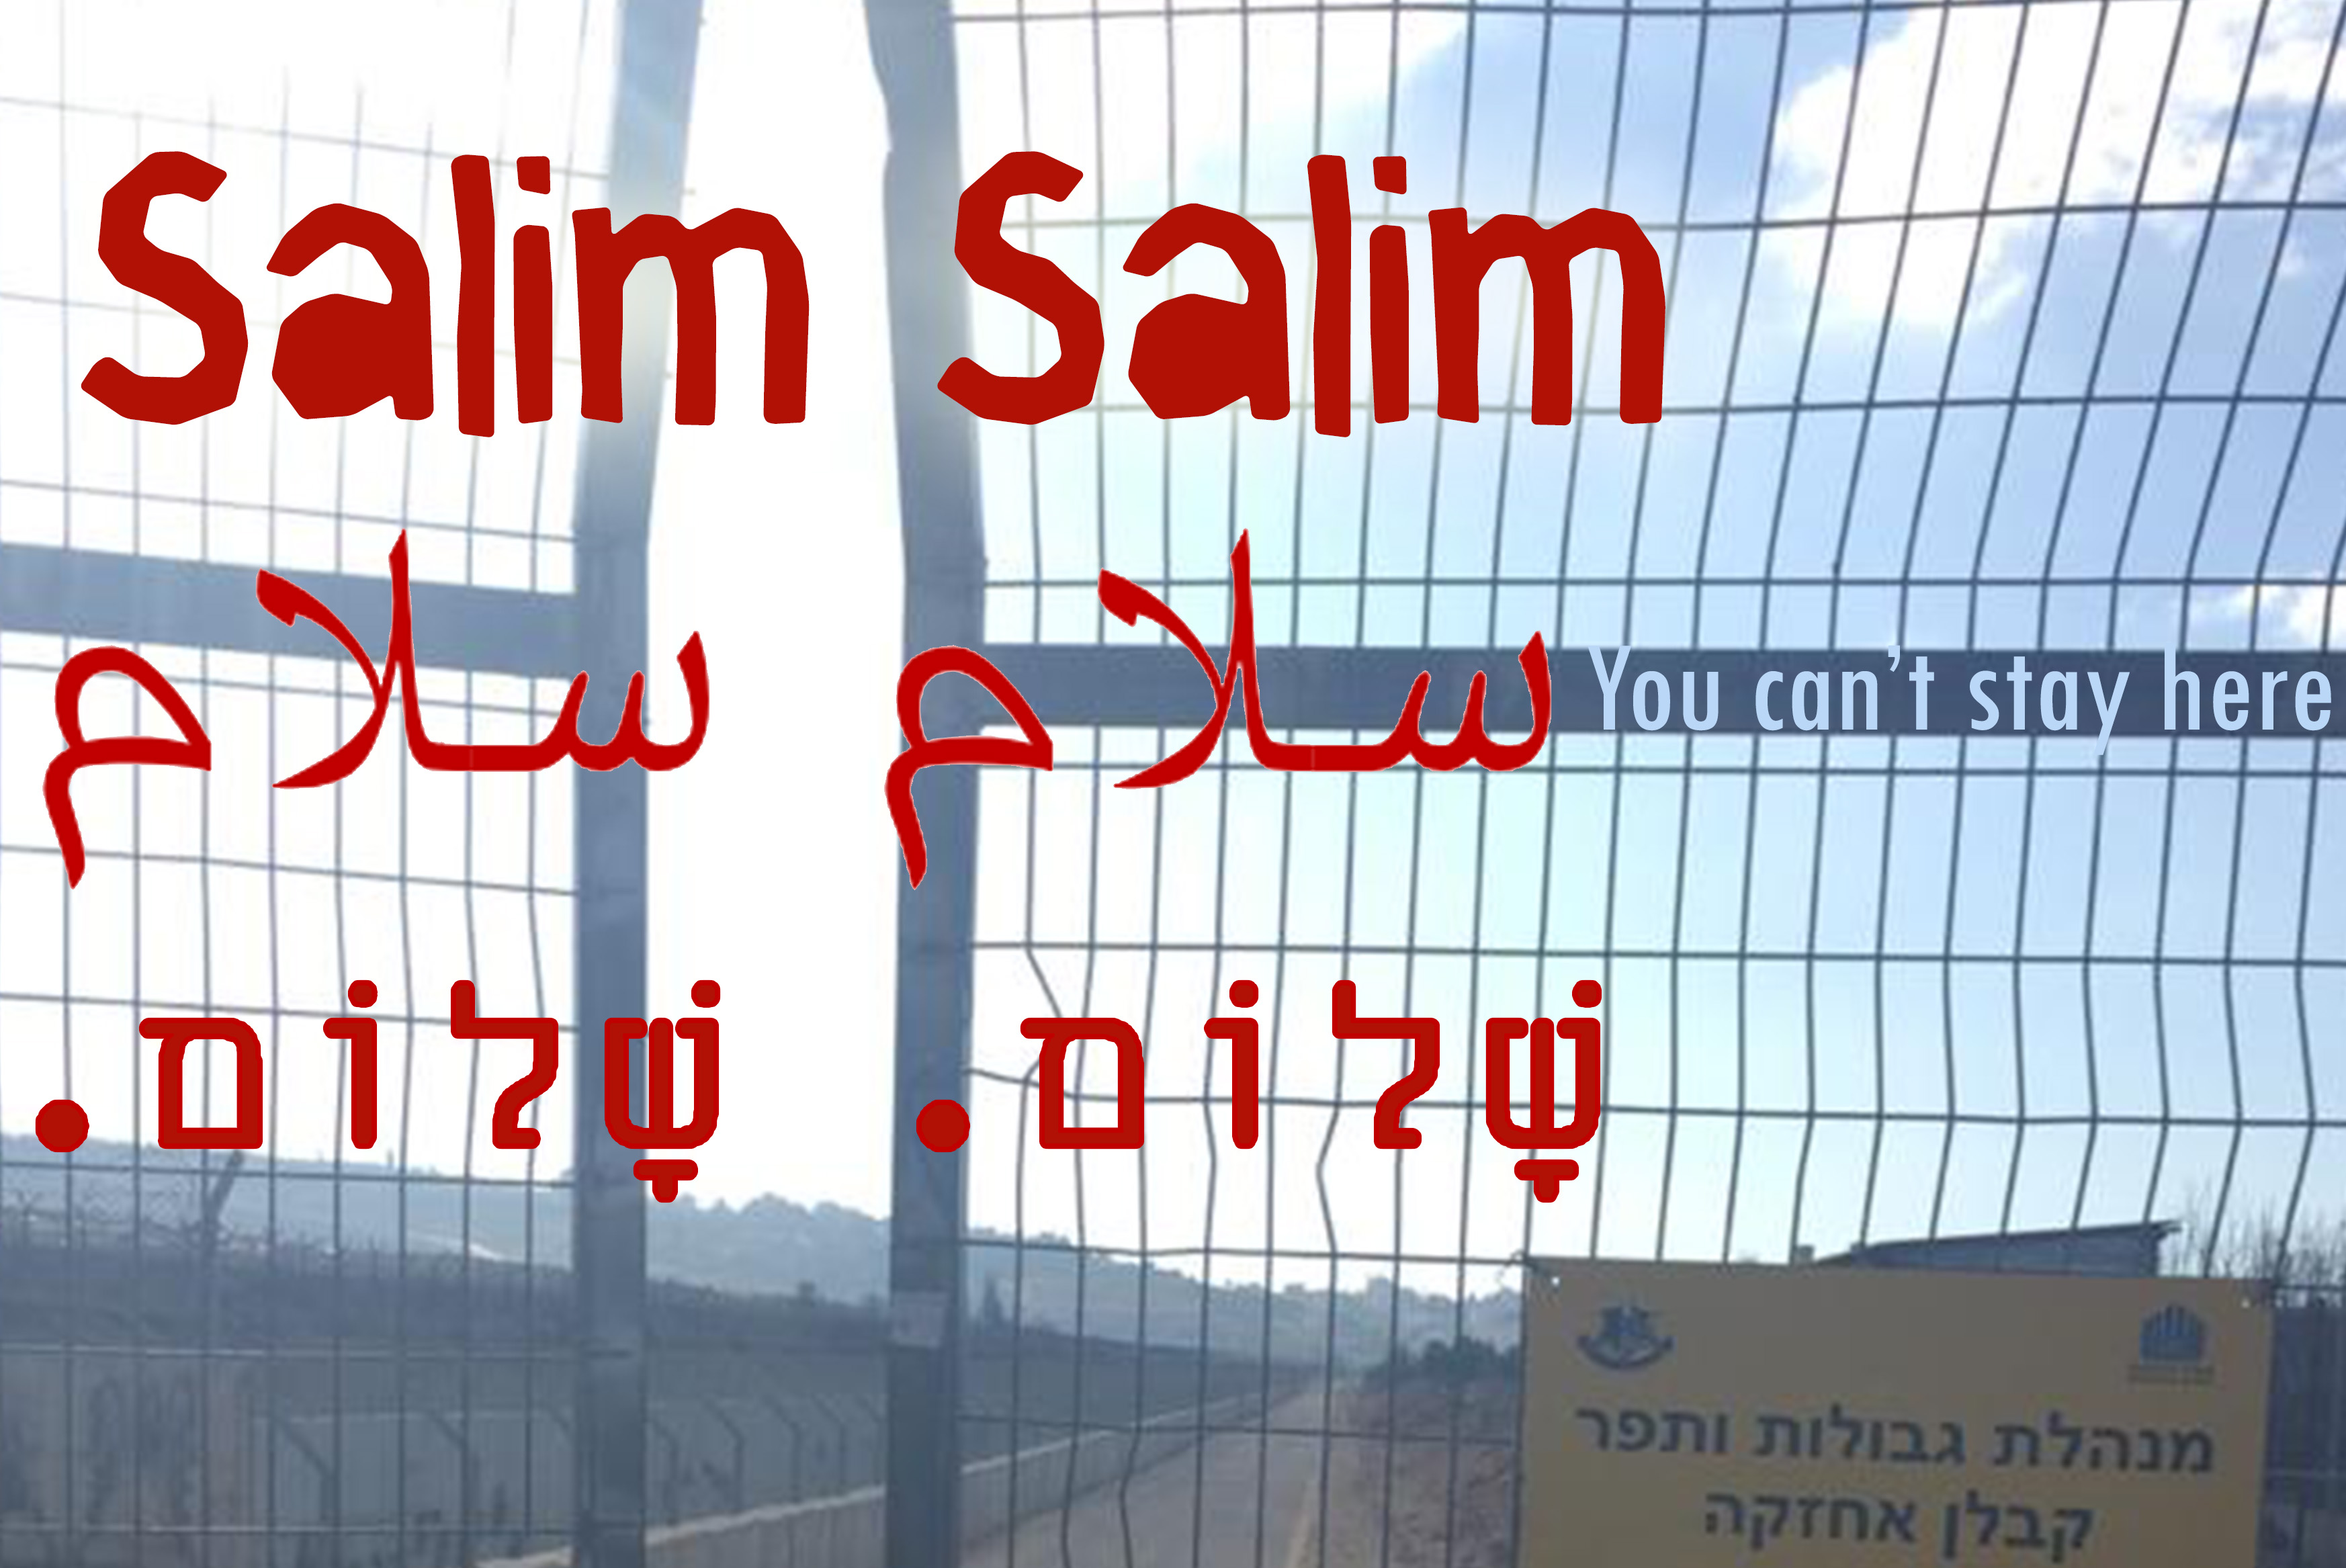 Salim Salim image.